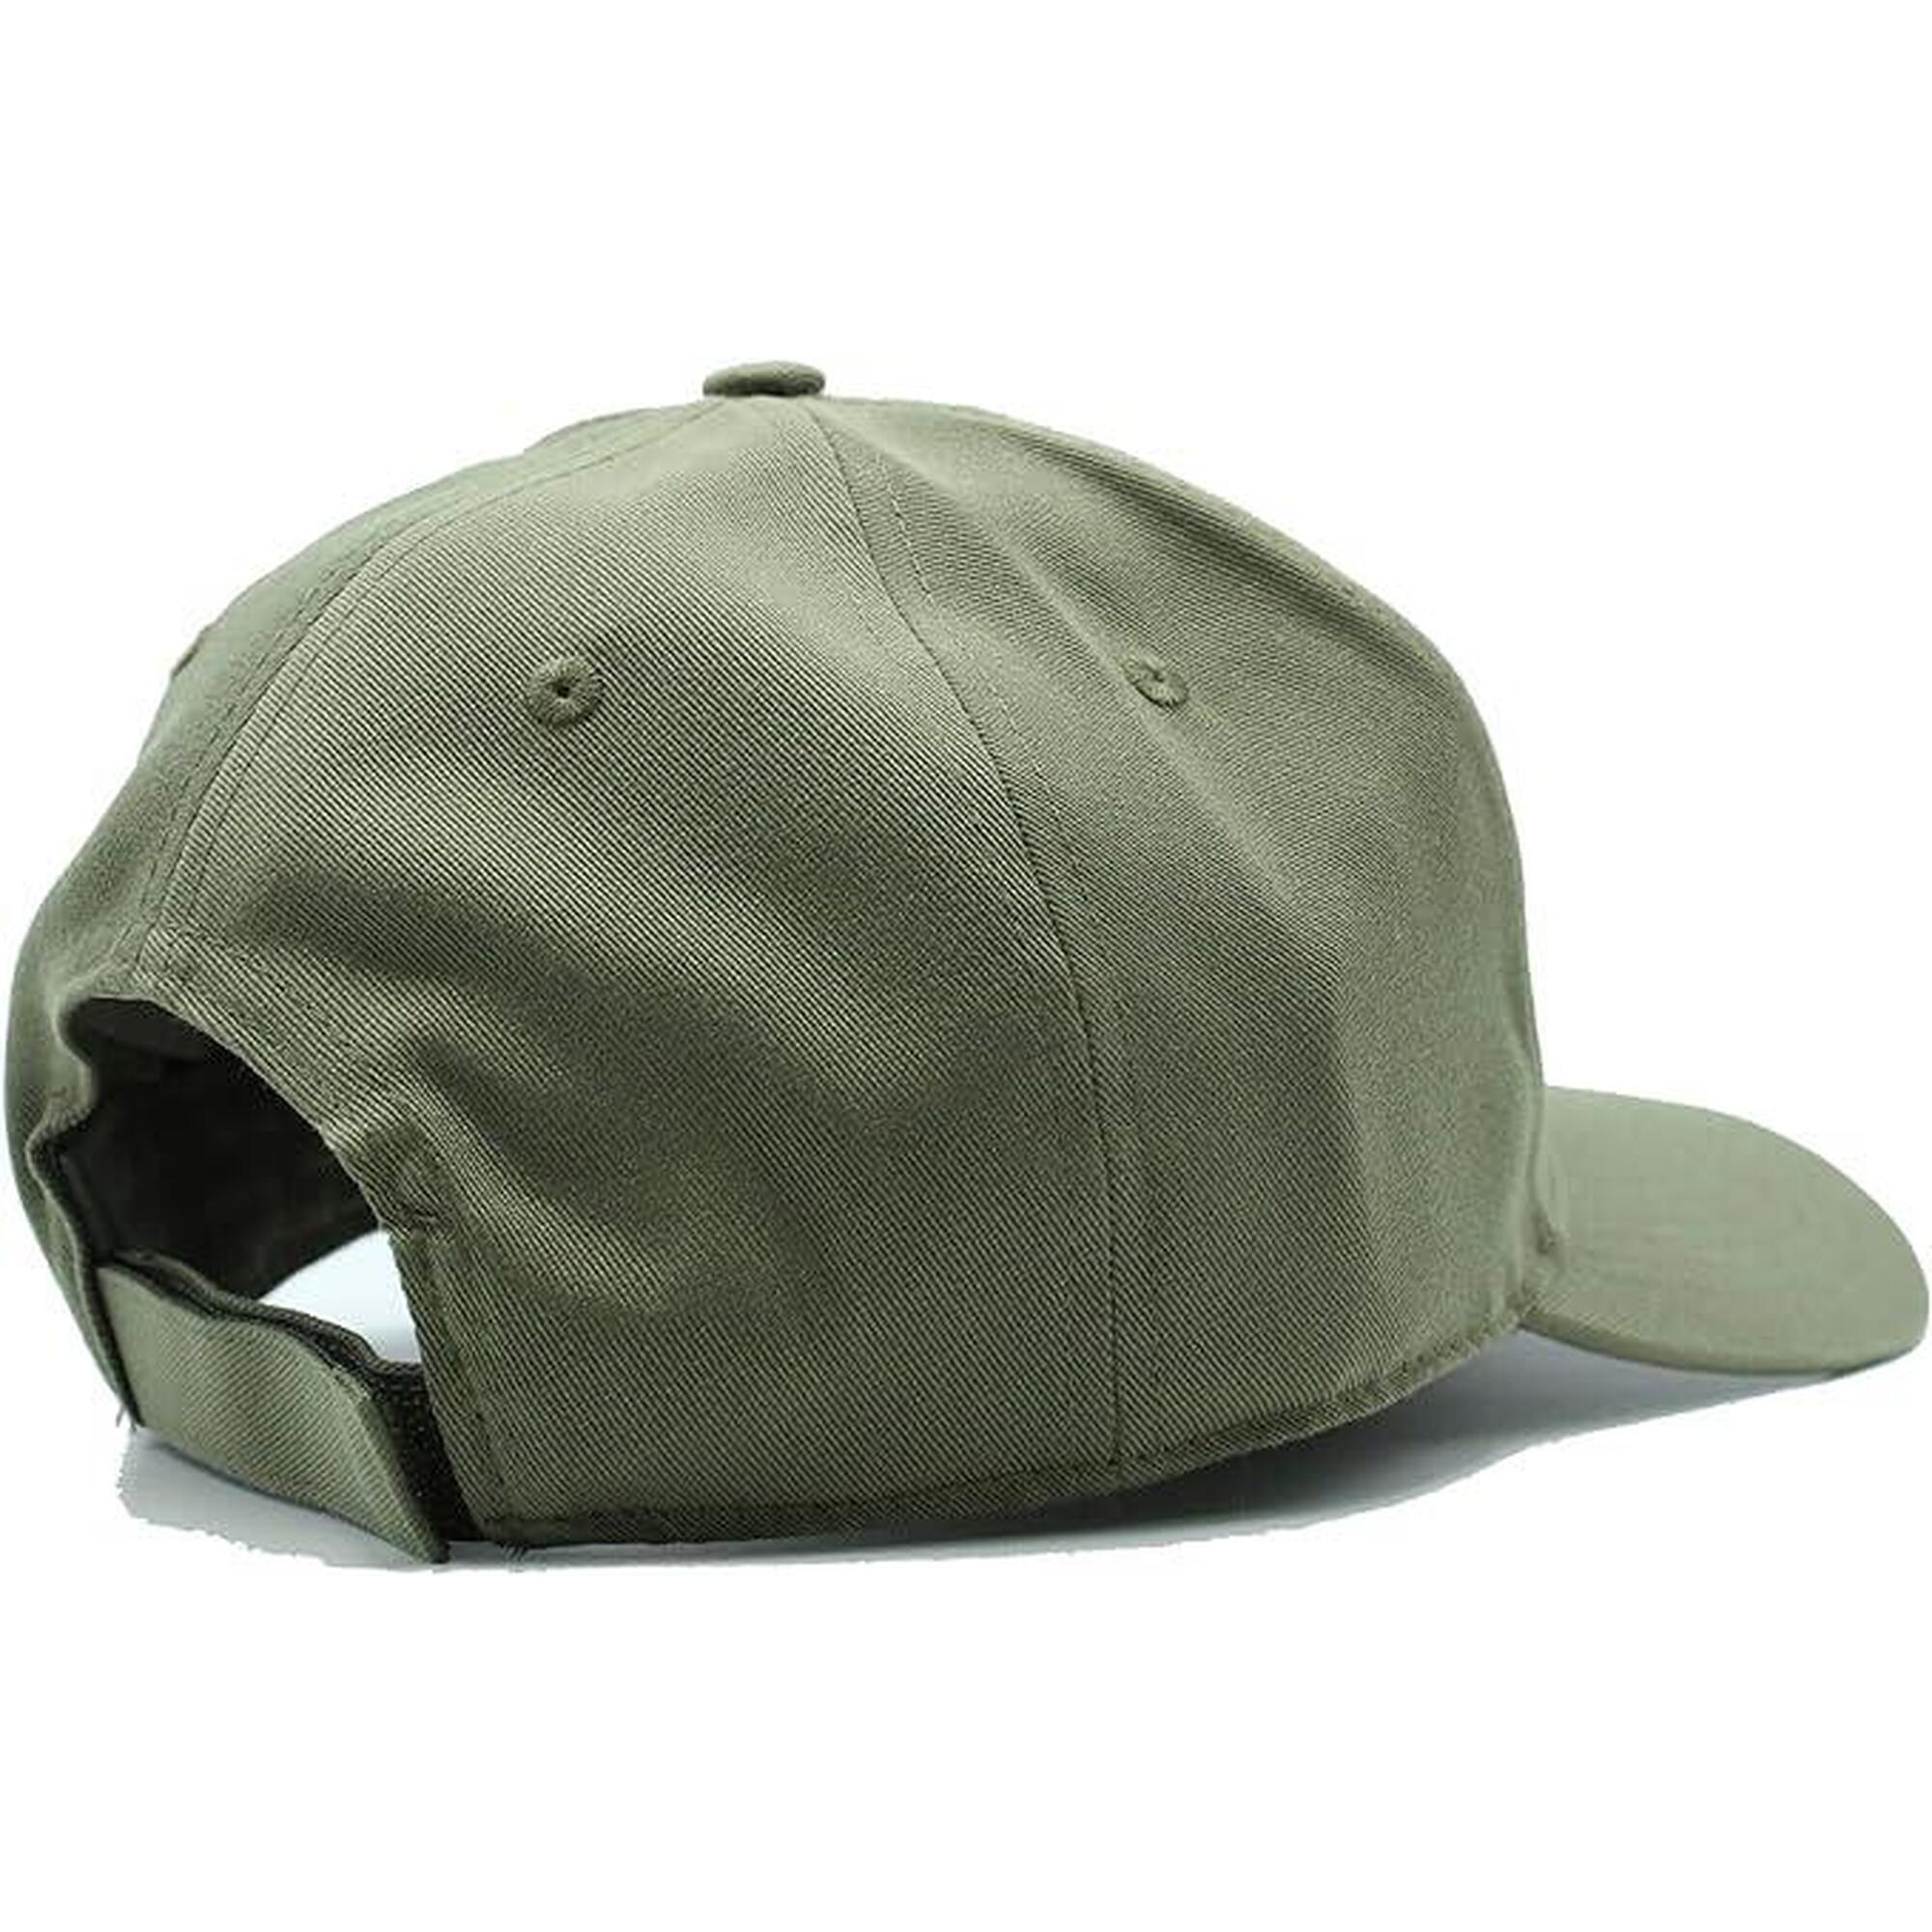 Gorra de Beisbol Cap Ajustable - Reciclada - (Verde oliva)